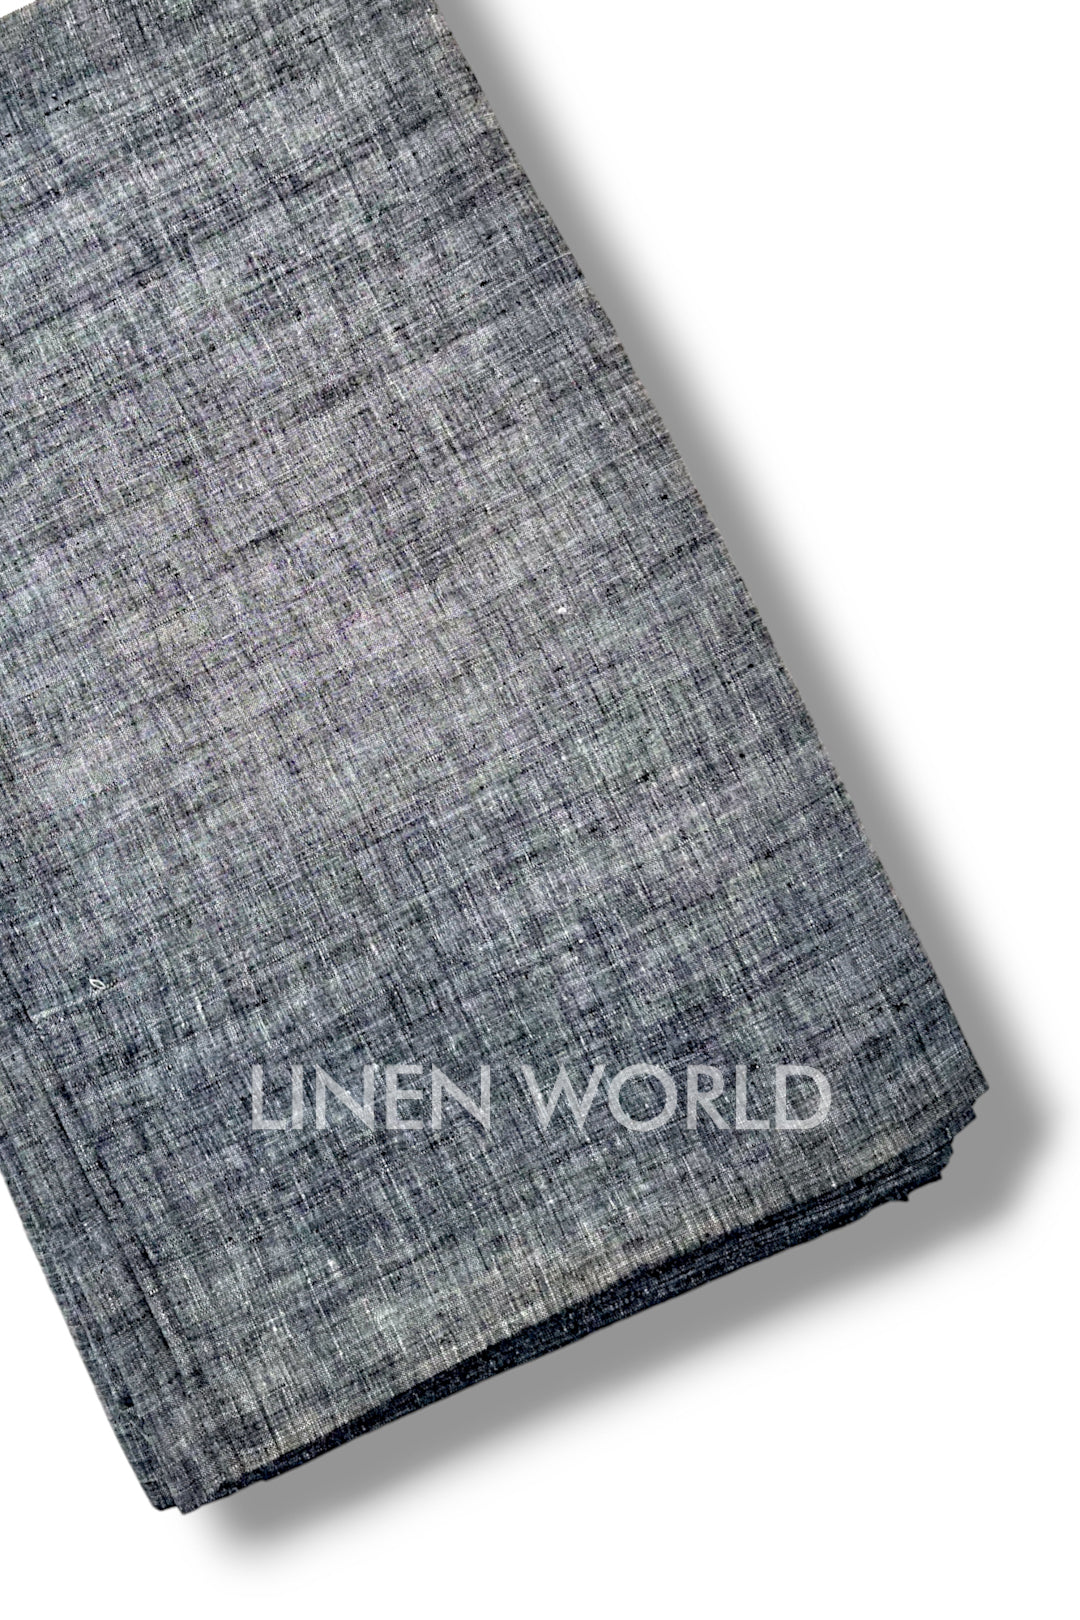 grey pure linen 60 lea shirting fabric - linenworldonline.in